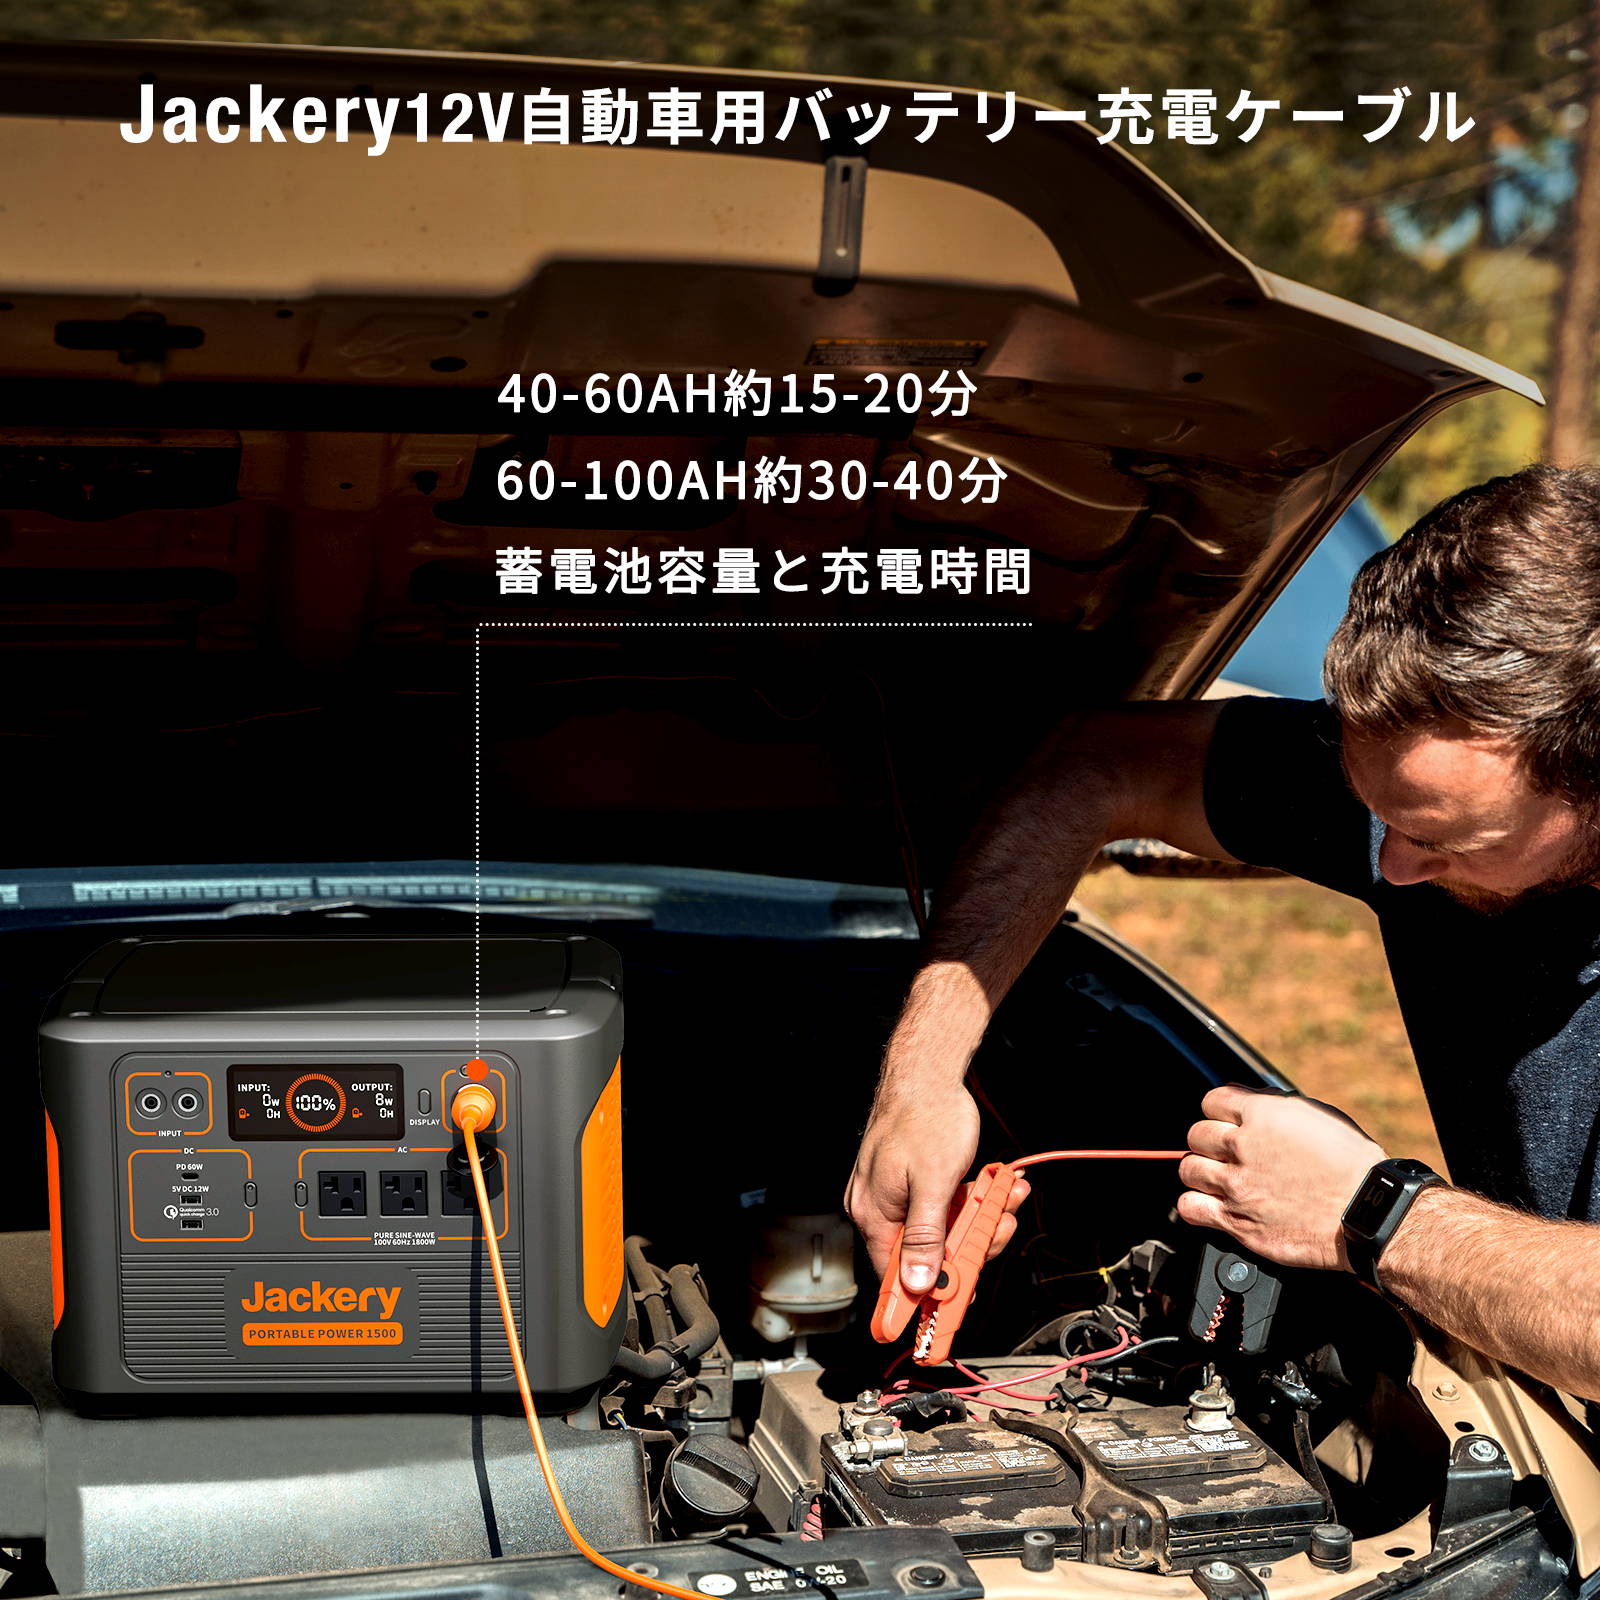 Jackery 12V 自動車用バッテリー充電ケーブルで接続可能なポータブル電源